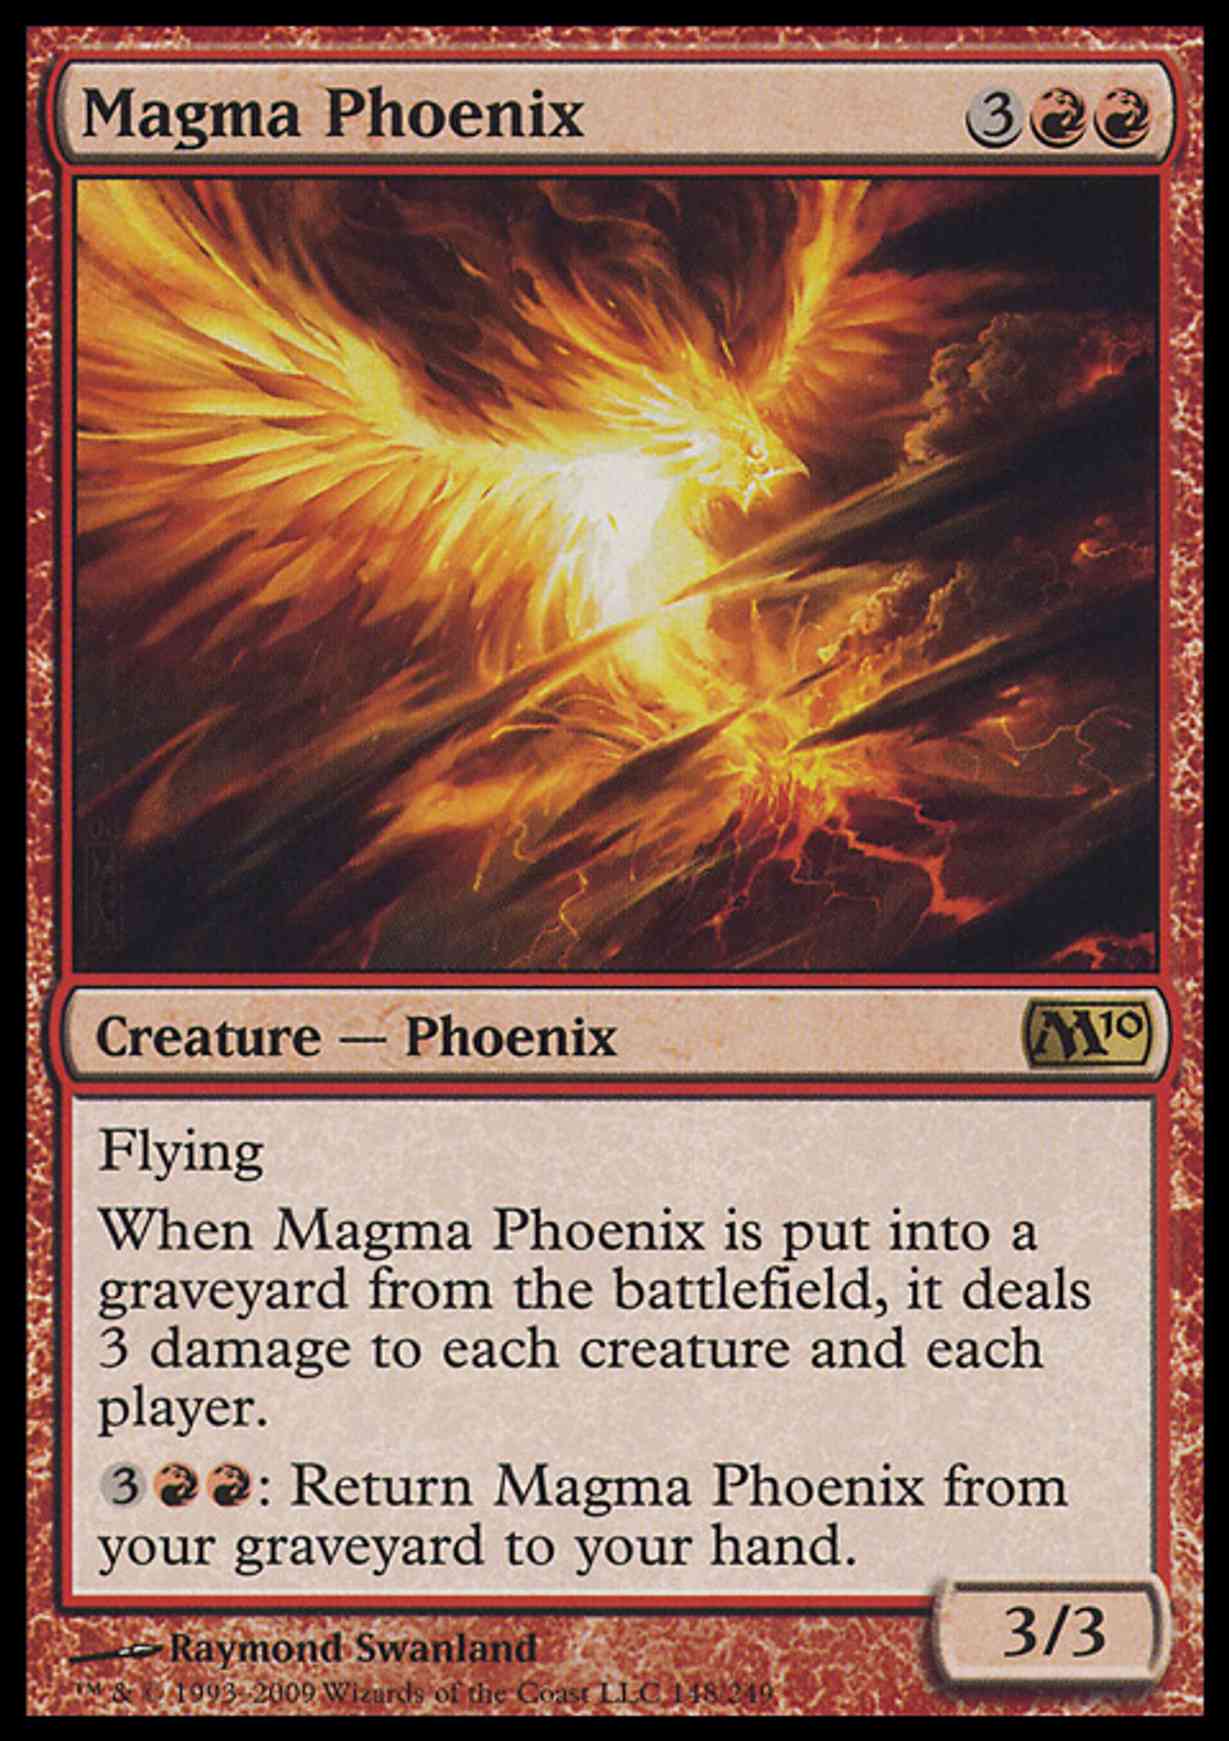 Magma Phoenix magic card front